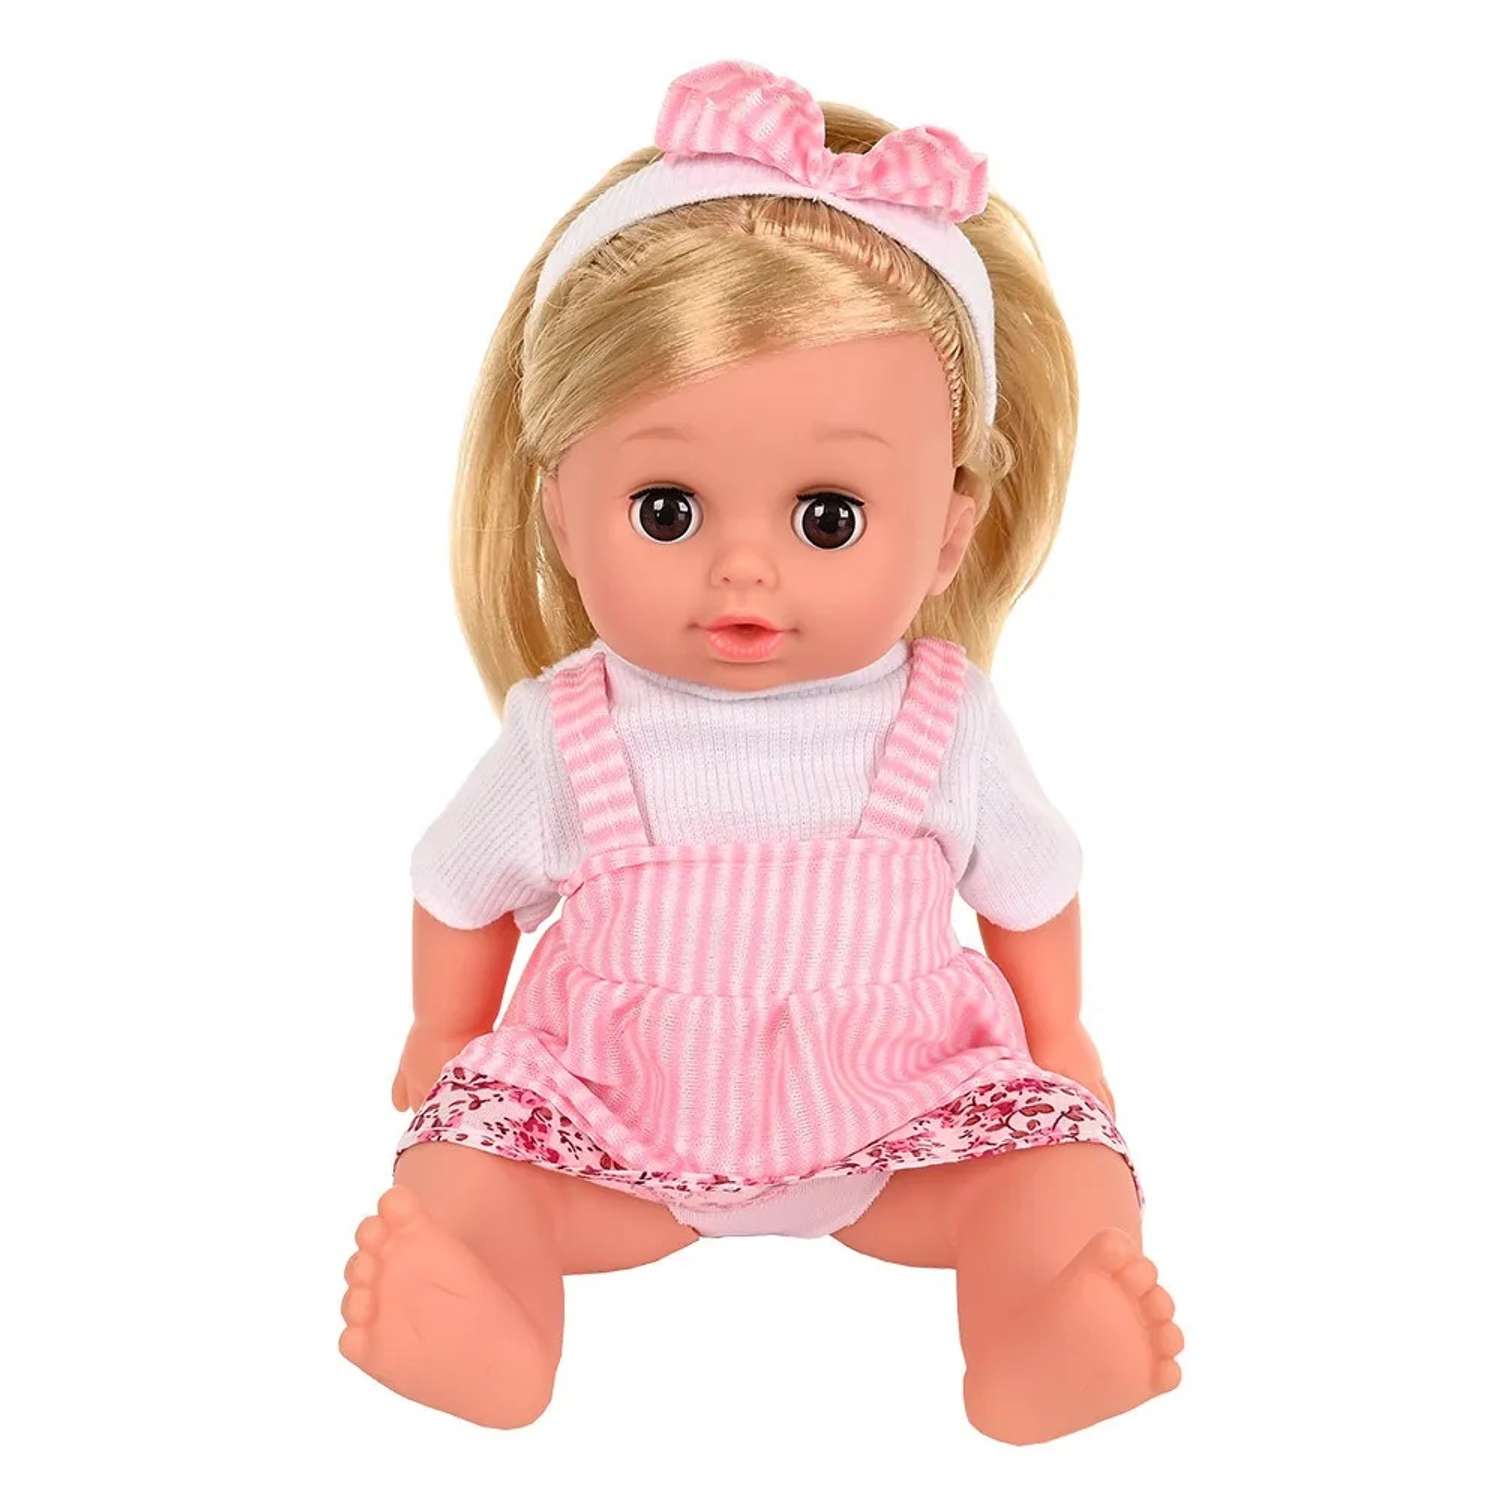 Кукла Пупс TrendToys Интерактивная 16 аксессуаров TT182 - фото 8